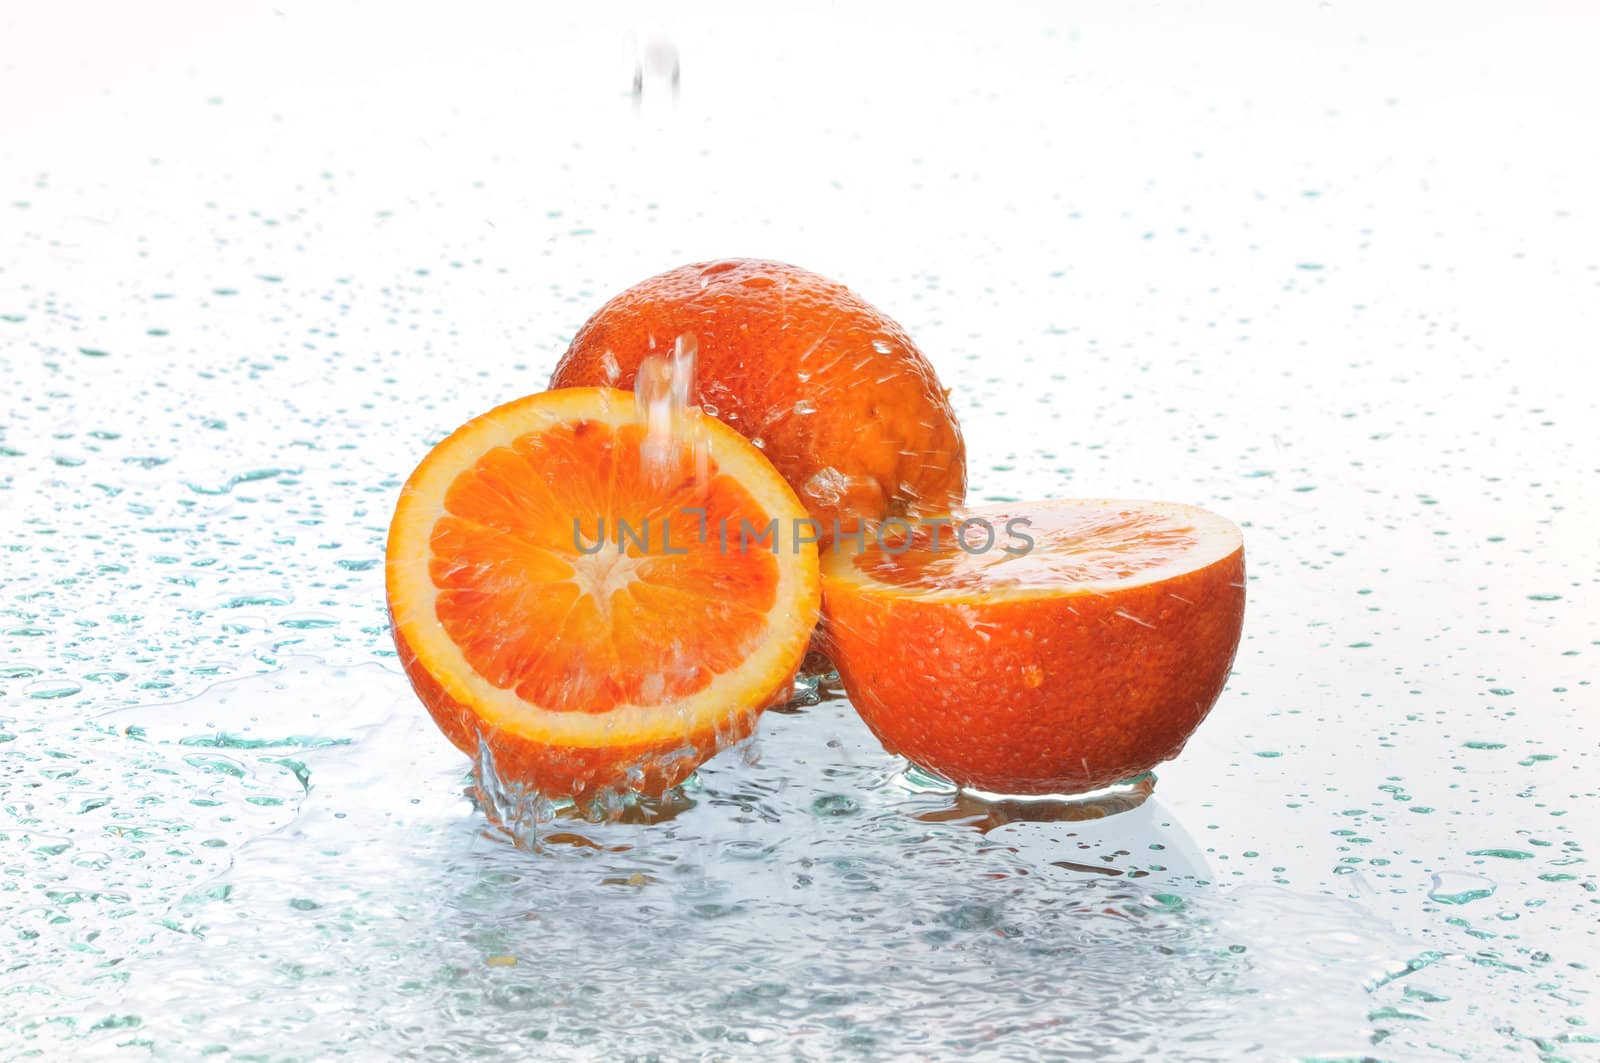 On a ripe orange pour water